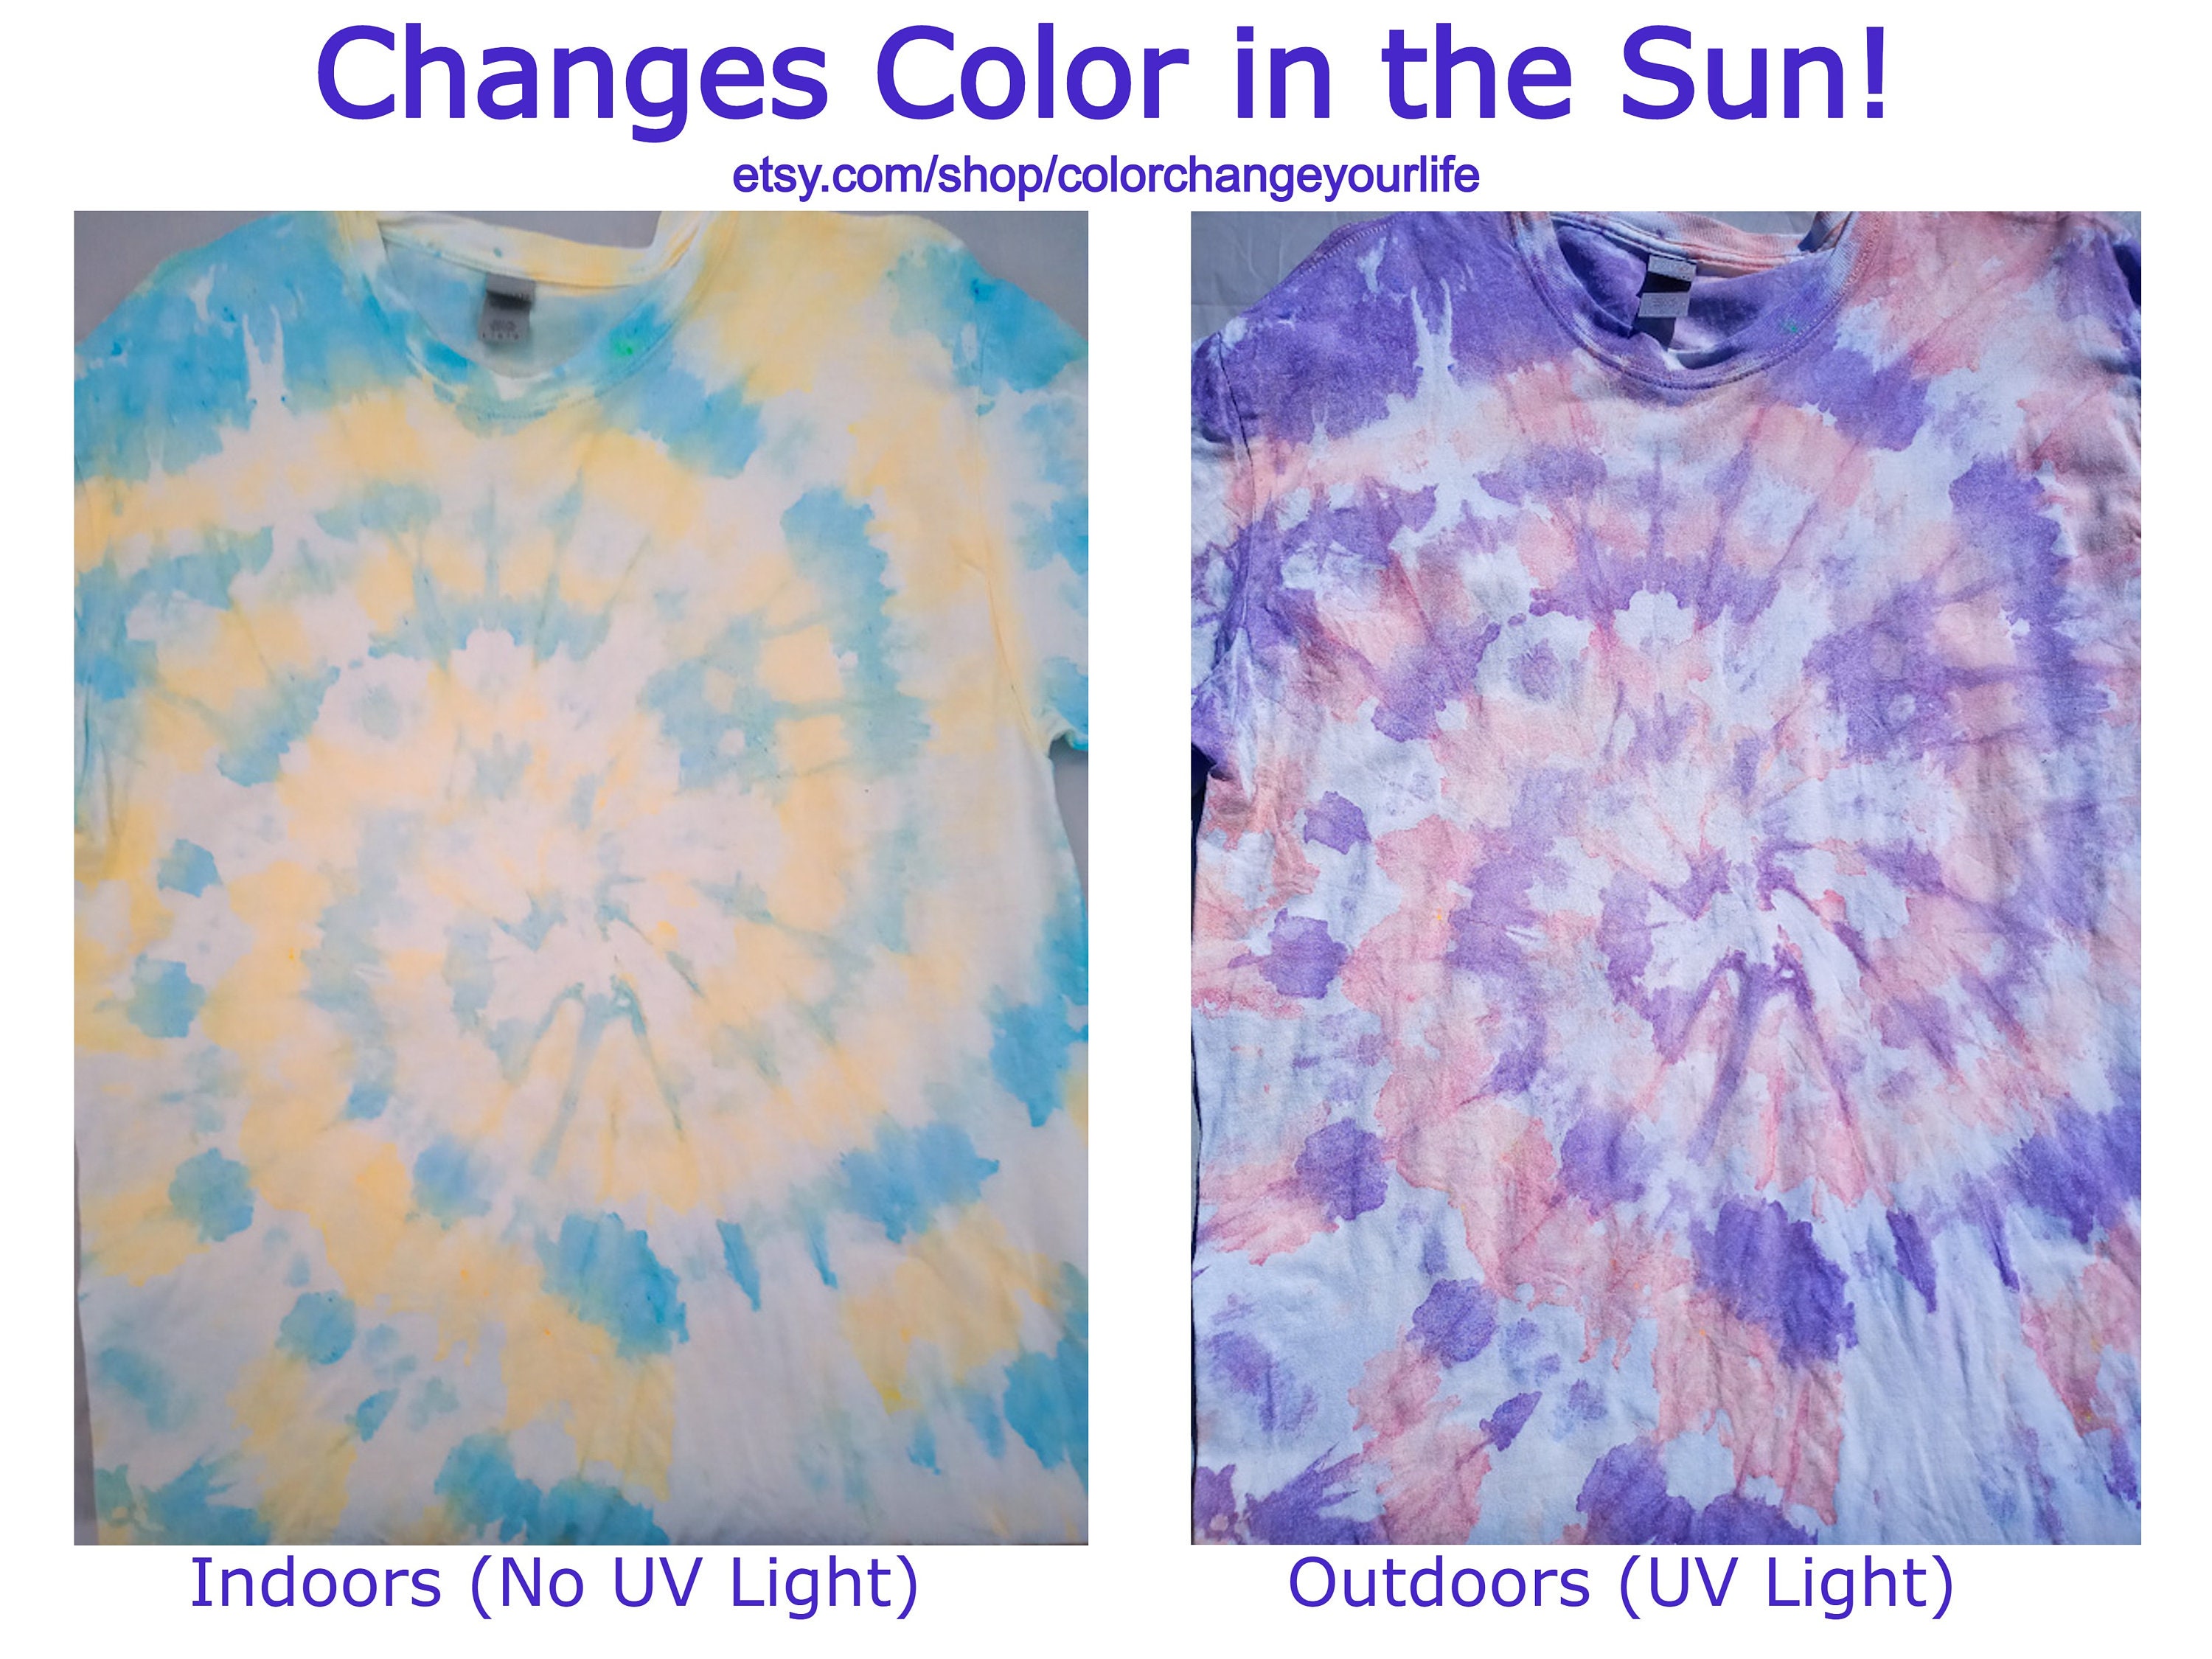 Hue Chromic® Solar Fabric Dye - Pink to Blue 